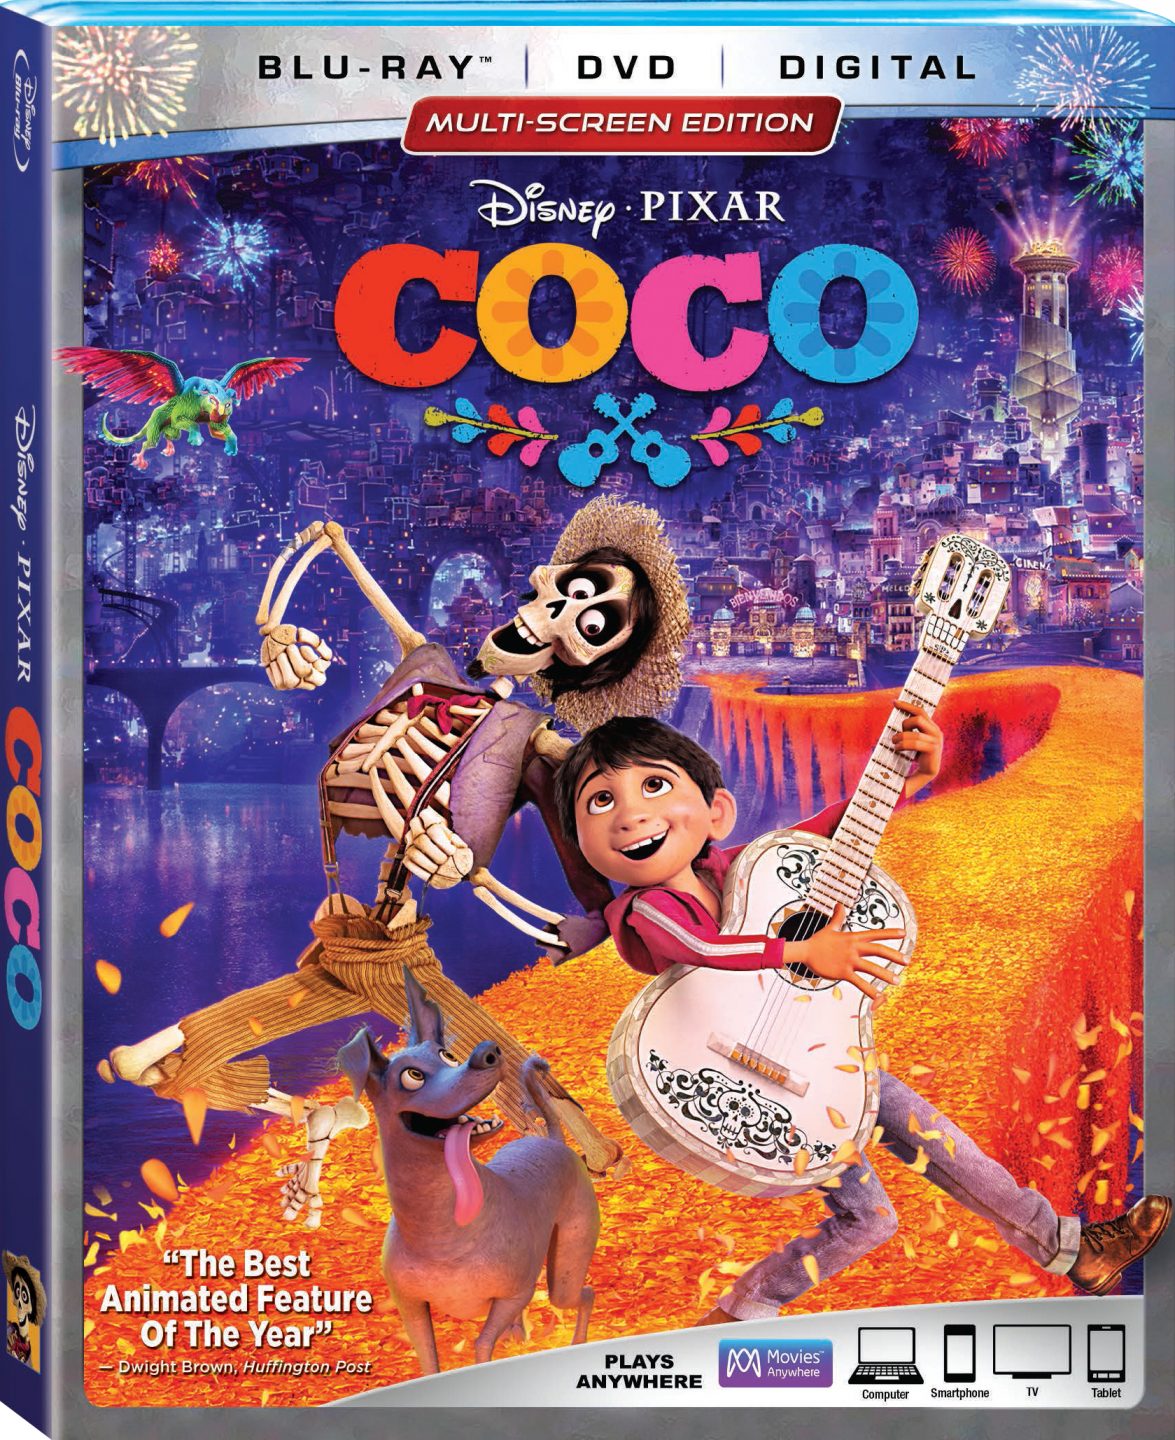 Coco Blu-Ray Combo cover (Walt Disney Studios Home Entertainment)